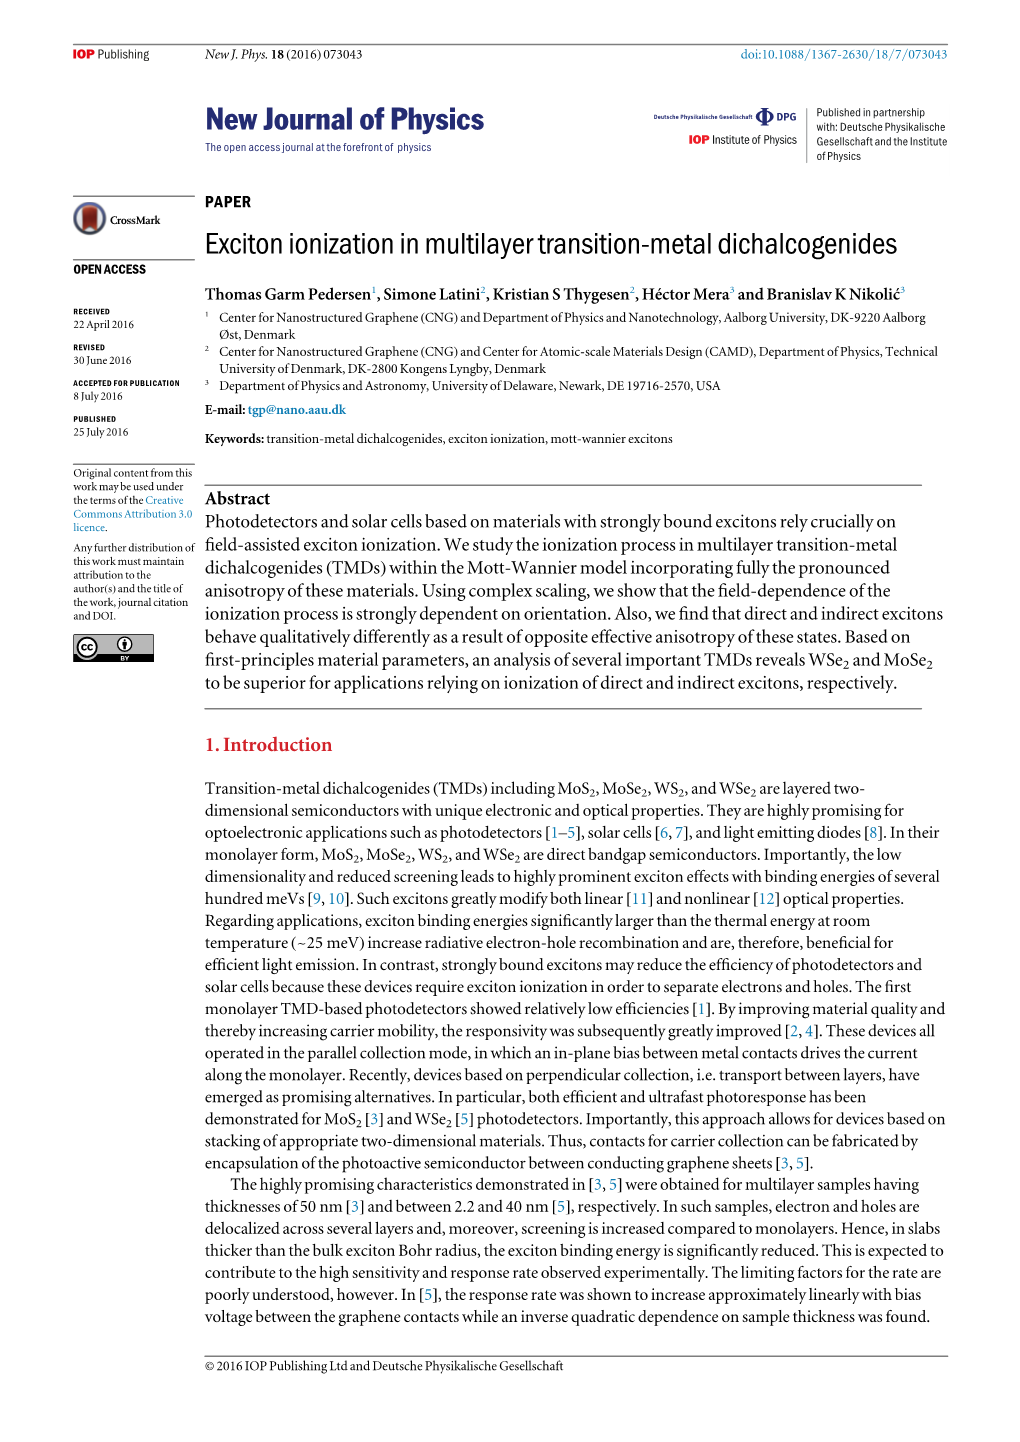 Exciton Ionization in Multilayer Transition-Metal Dichalcogenides